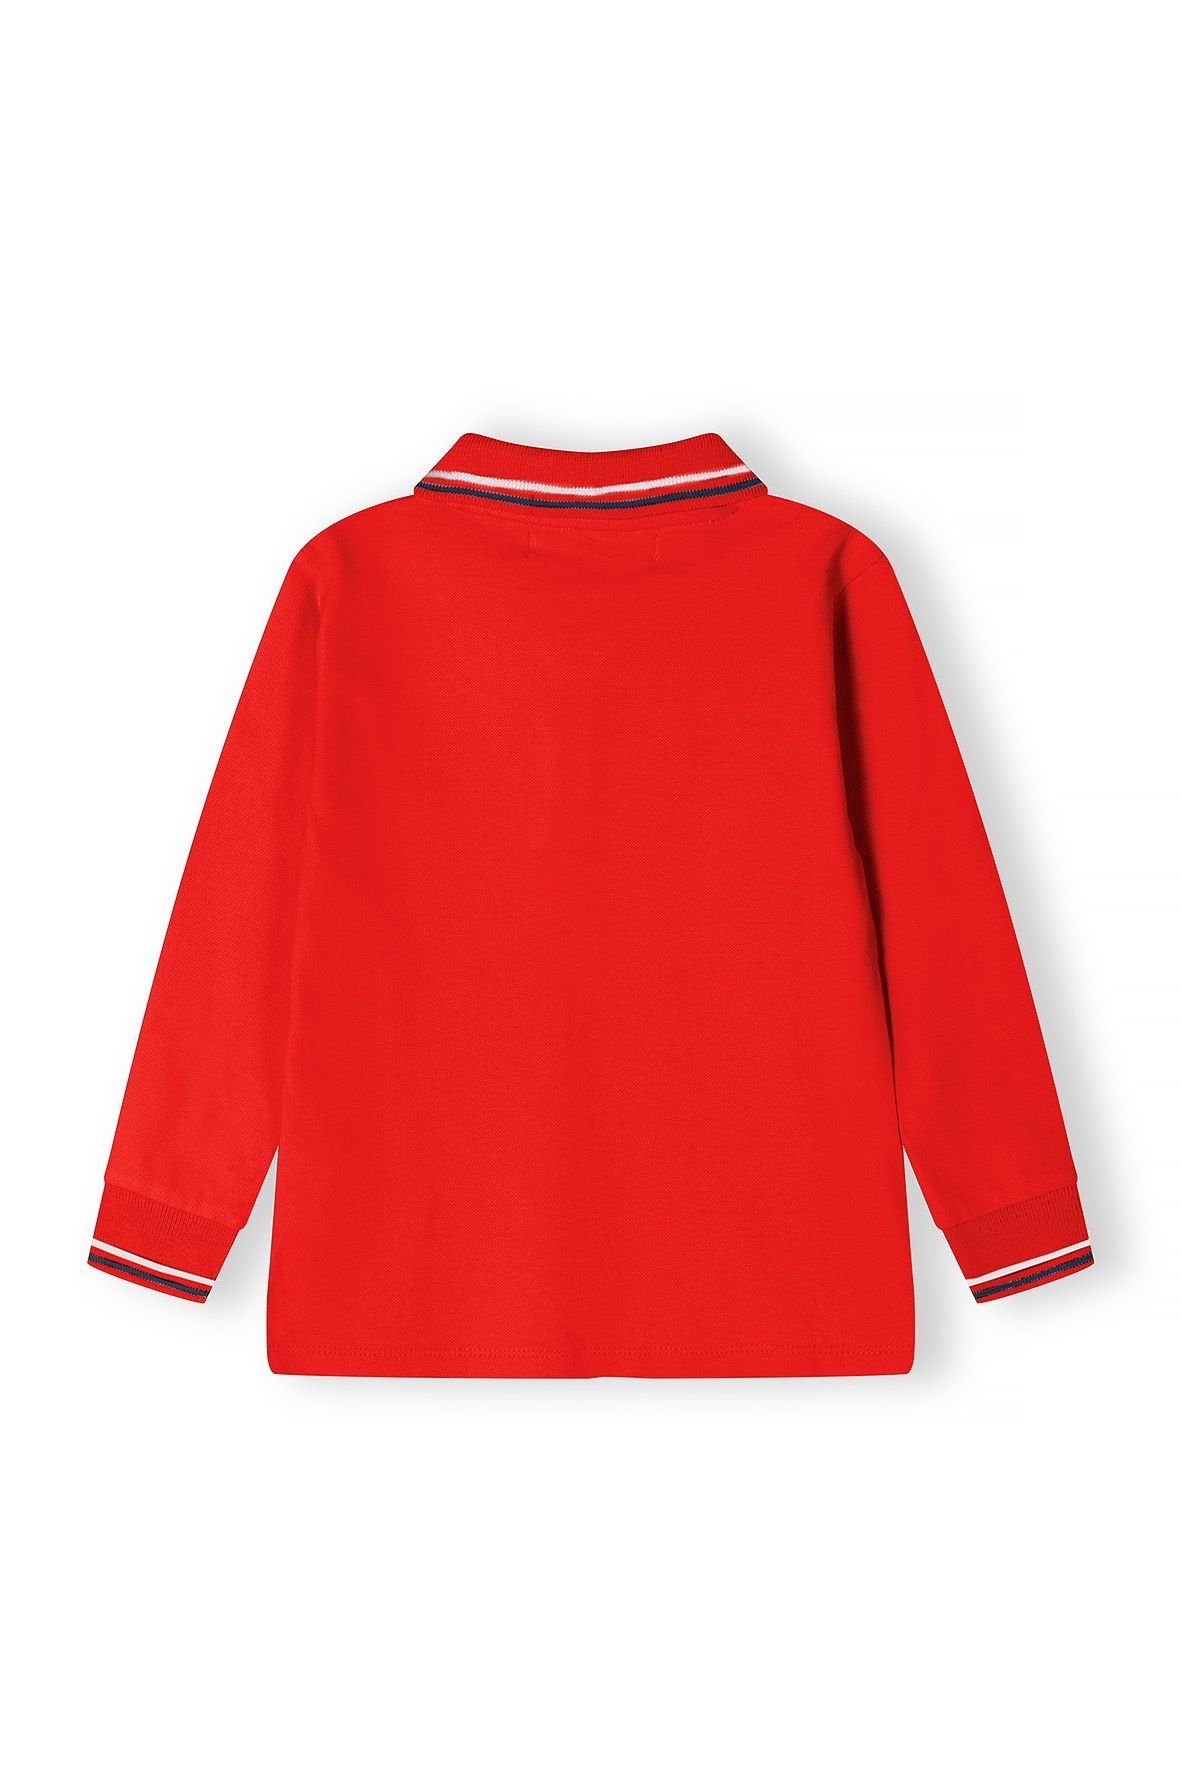 (12m-14y) Langärmlig Rot Poloshirt MINOTI